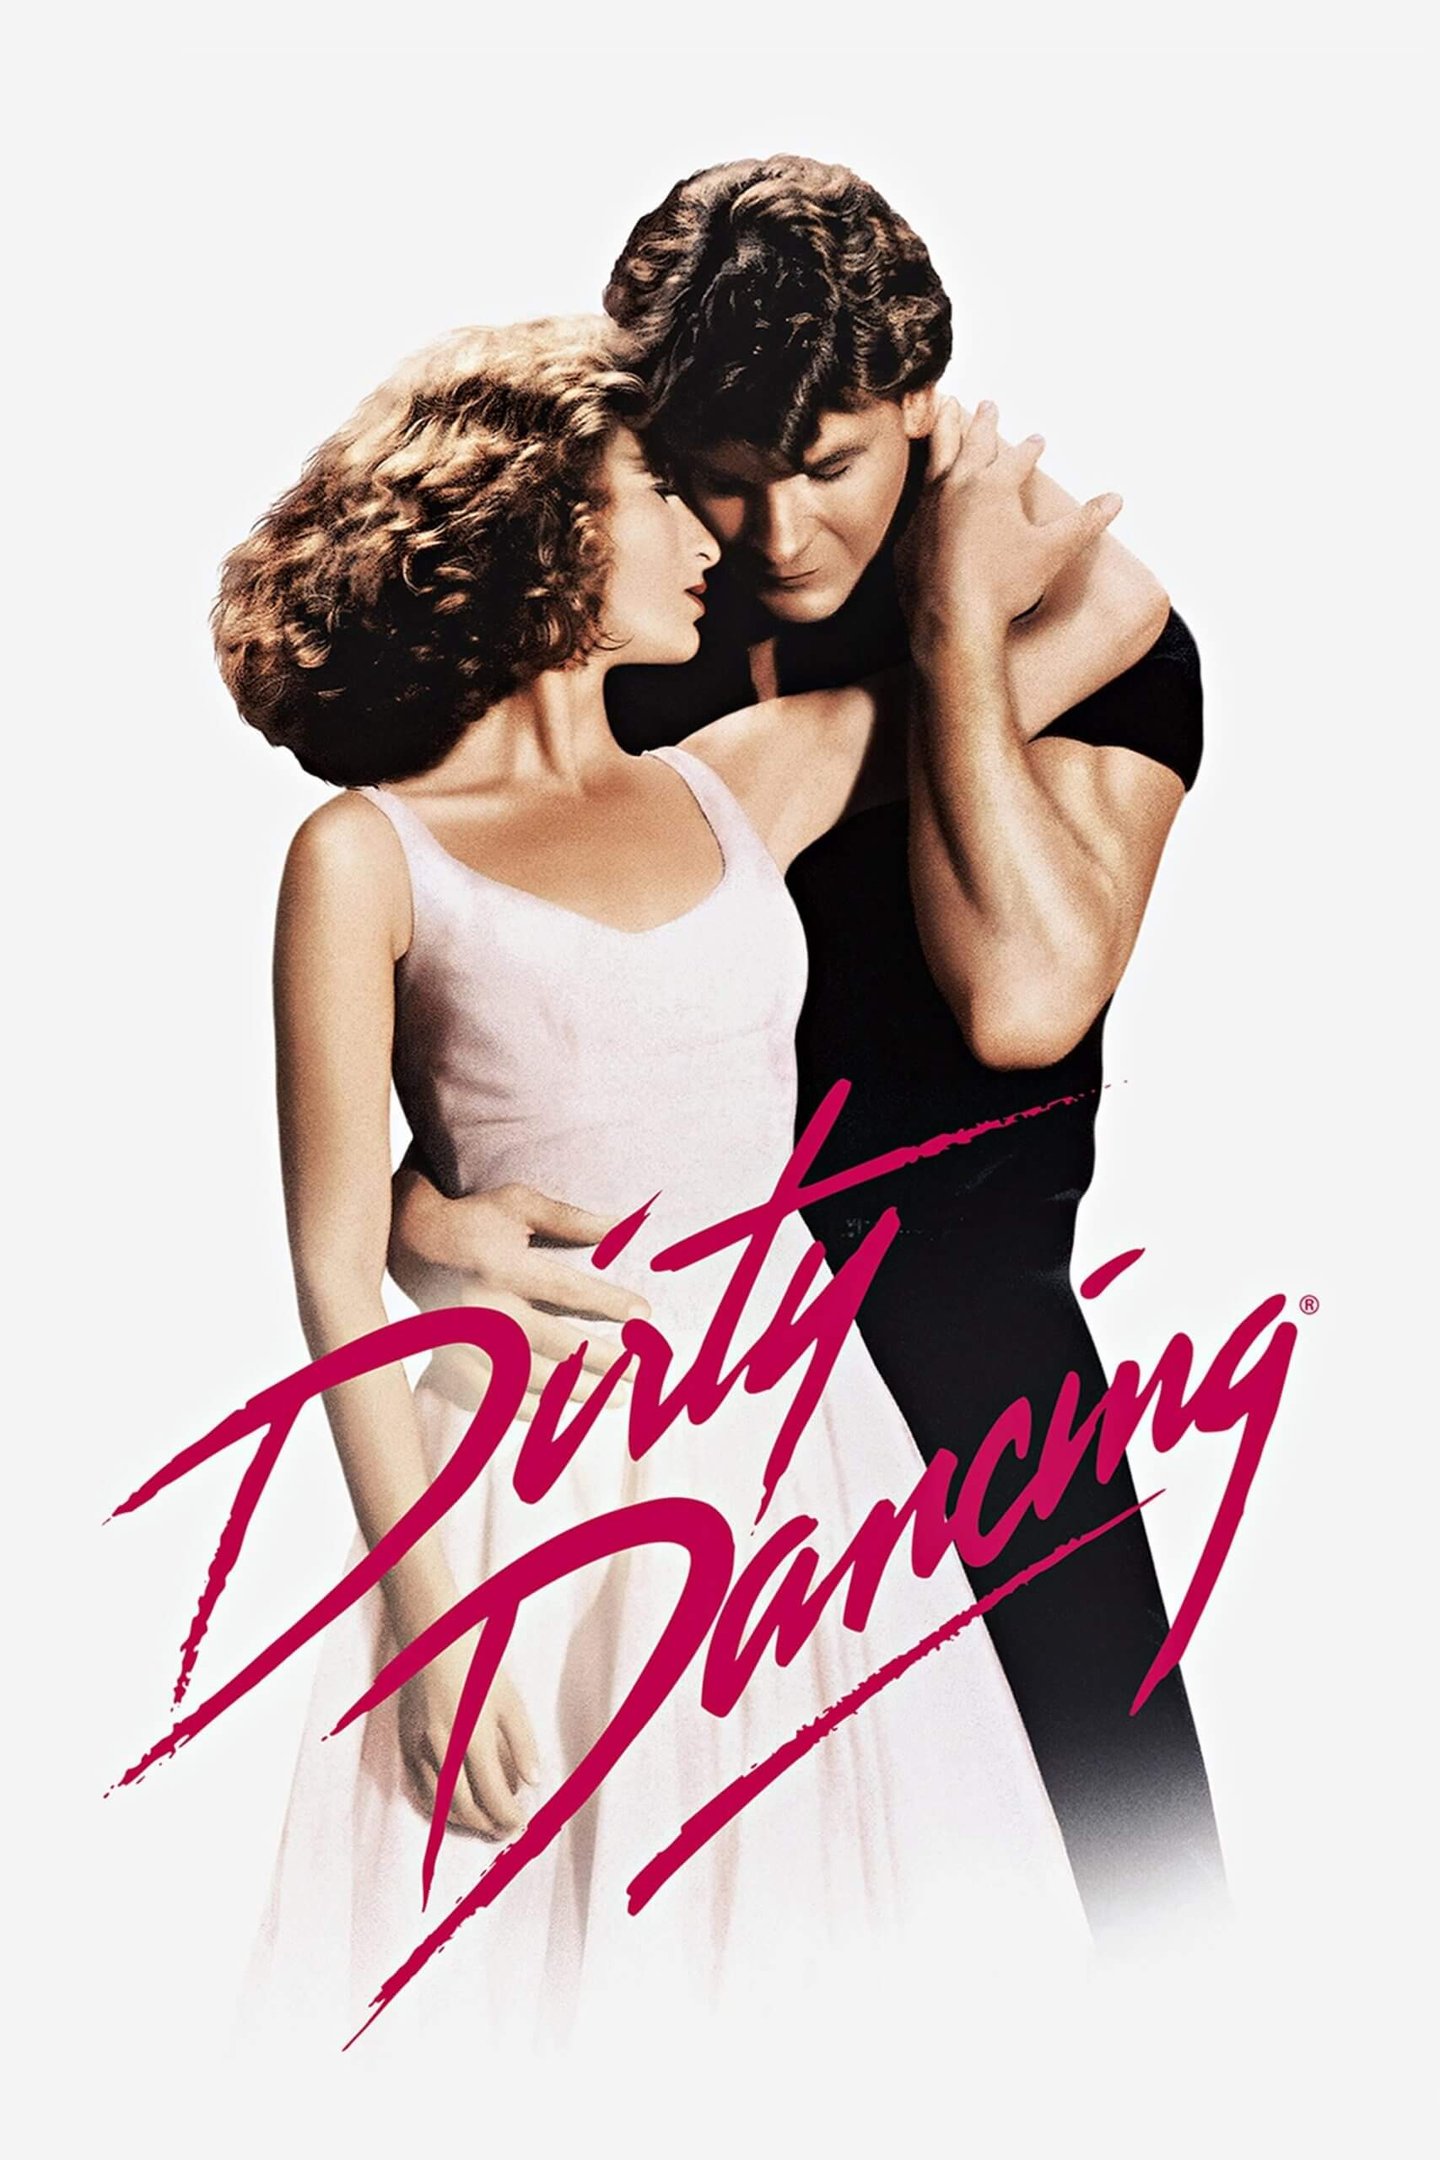 Dirty Dancing - filmes românticos - filmes românticos - filmes românticos - filmes românticos - https://stealthelook.com.br